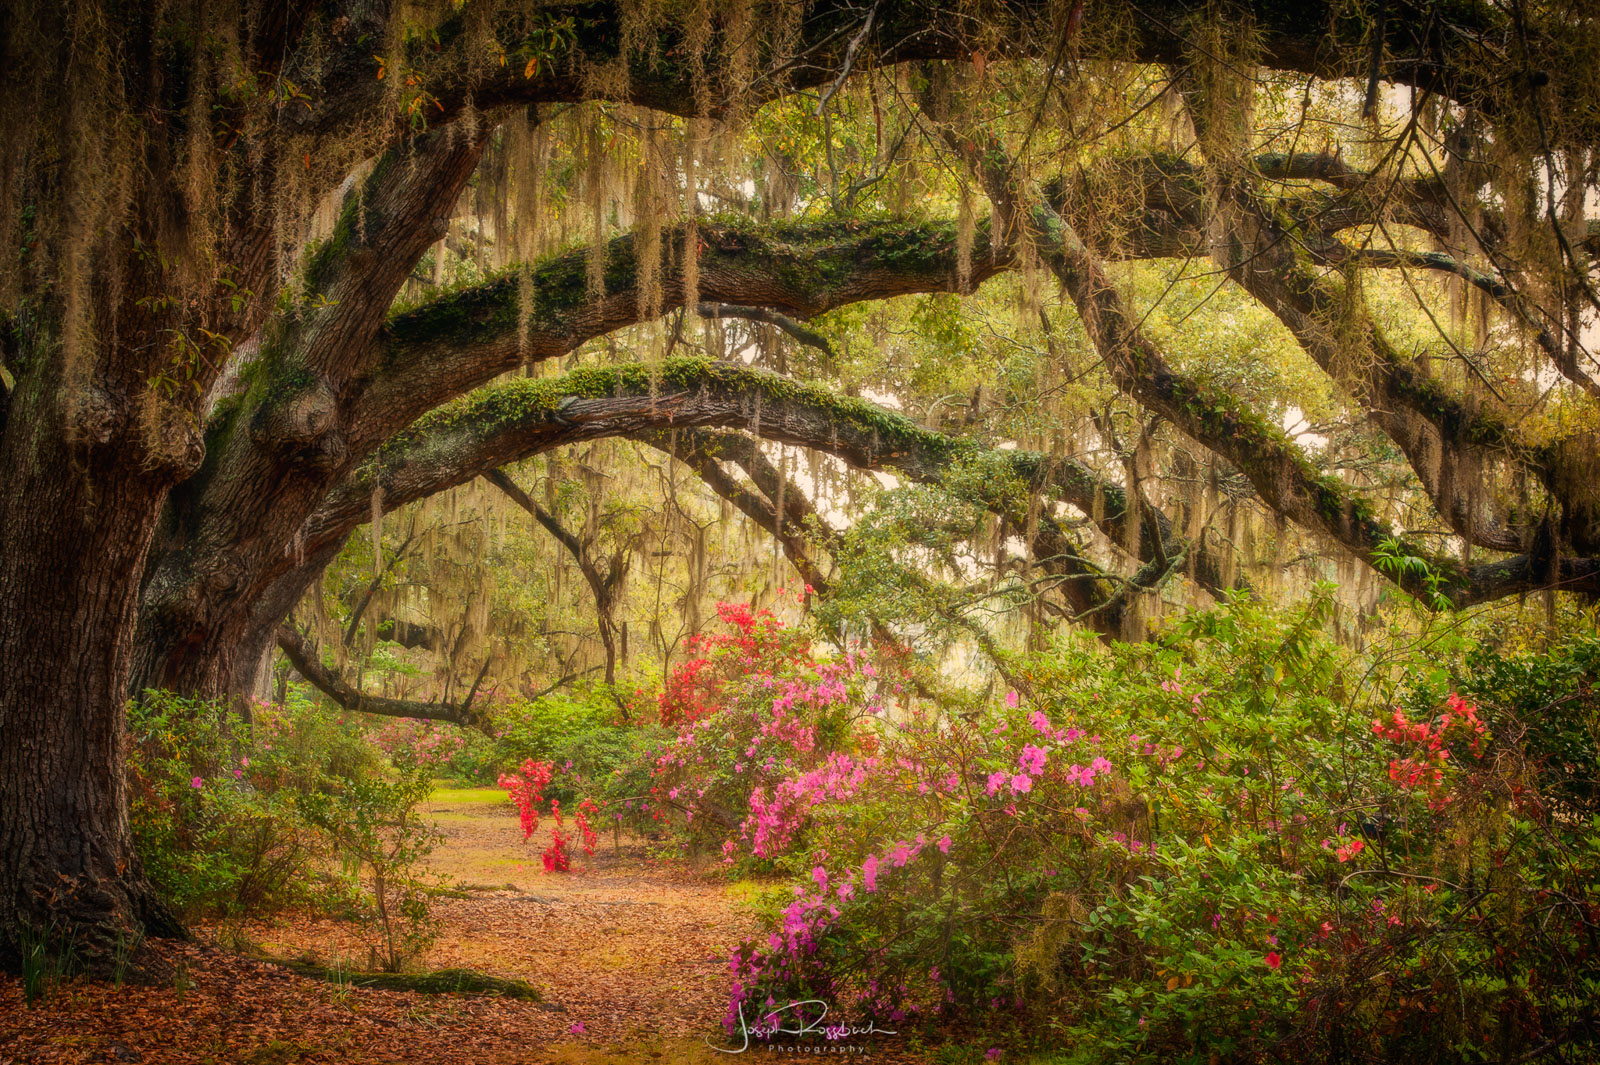 Live Oaks draped in spanish moss among flowering spring azaleas, Magnolia Plantation, Charleston, South Carolina.